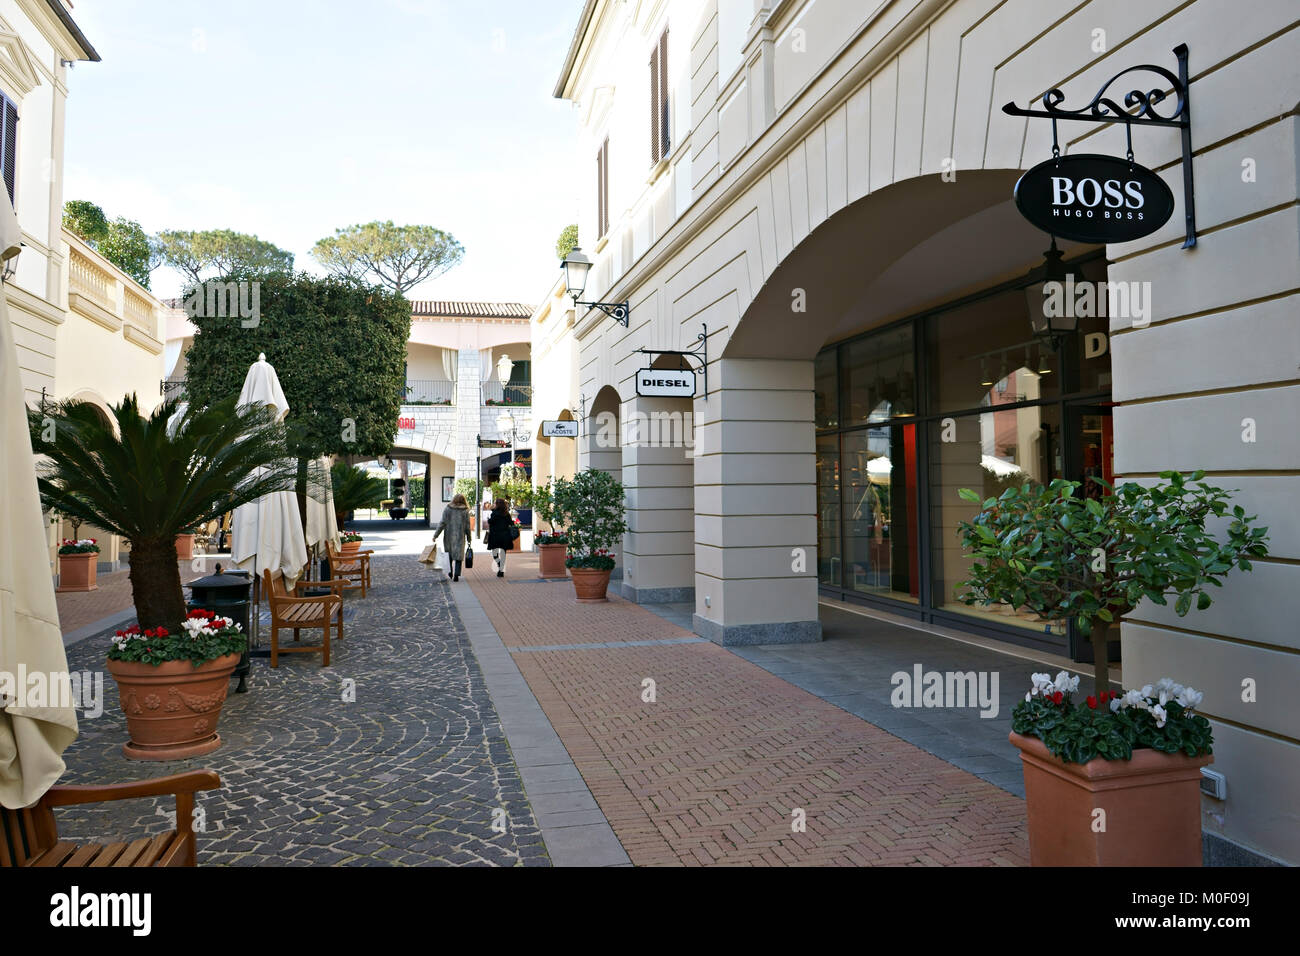 La Reggia Outlet - Hugo Boss store - a Marcianise, Caserta, Italia Foto  stock - Alamy